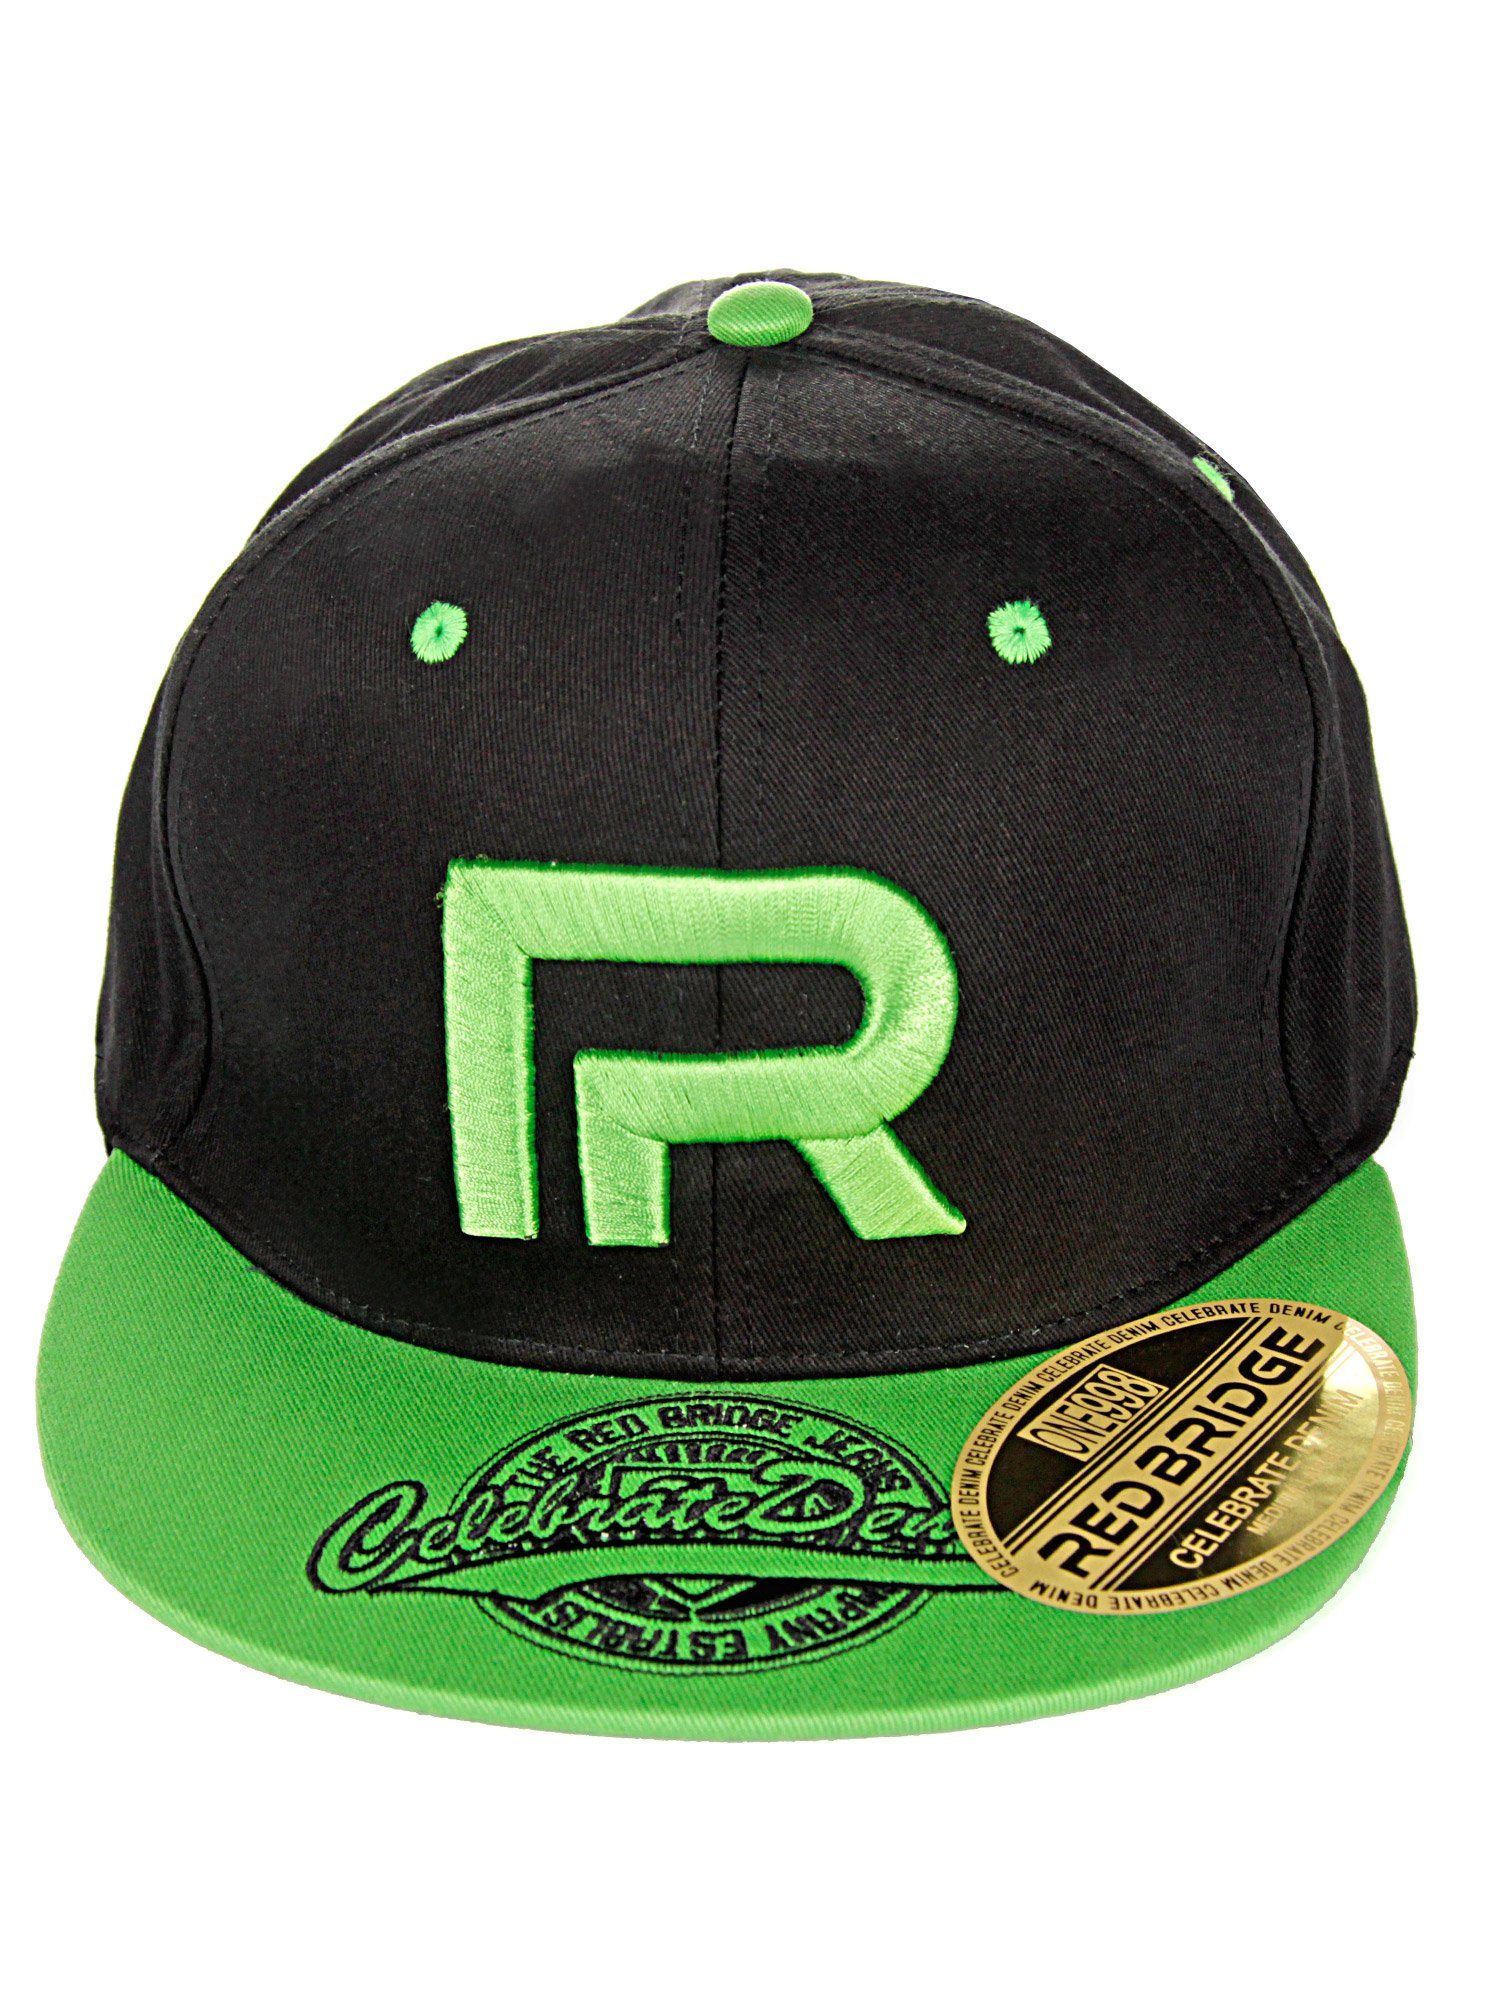 RedBridge Baseball Cap Wellingborough mit Druckverschluss schwarz-grün | Baseball Caps